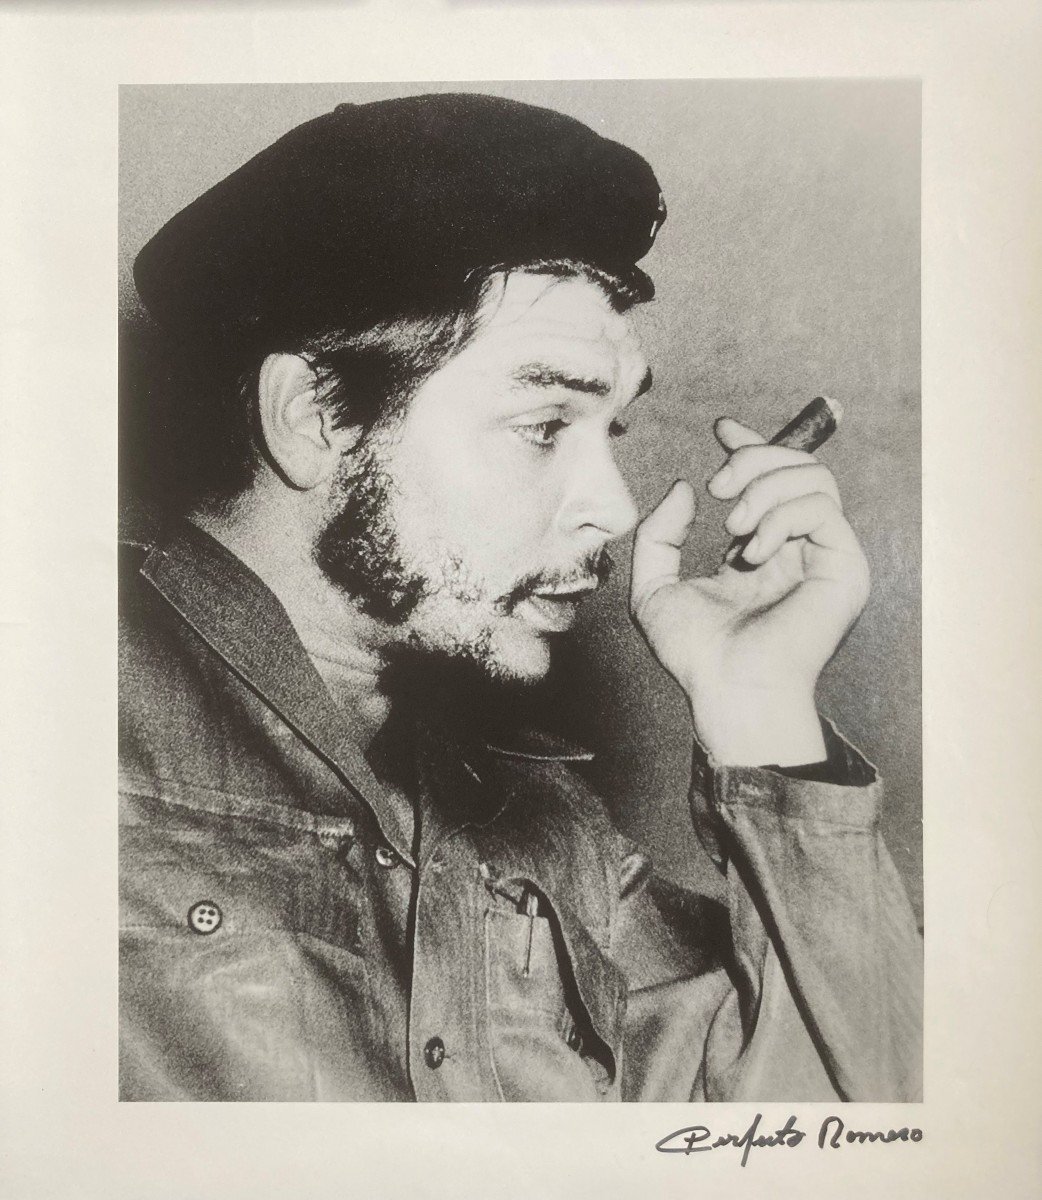 Che Guevara – Signed Photo